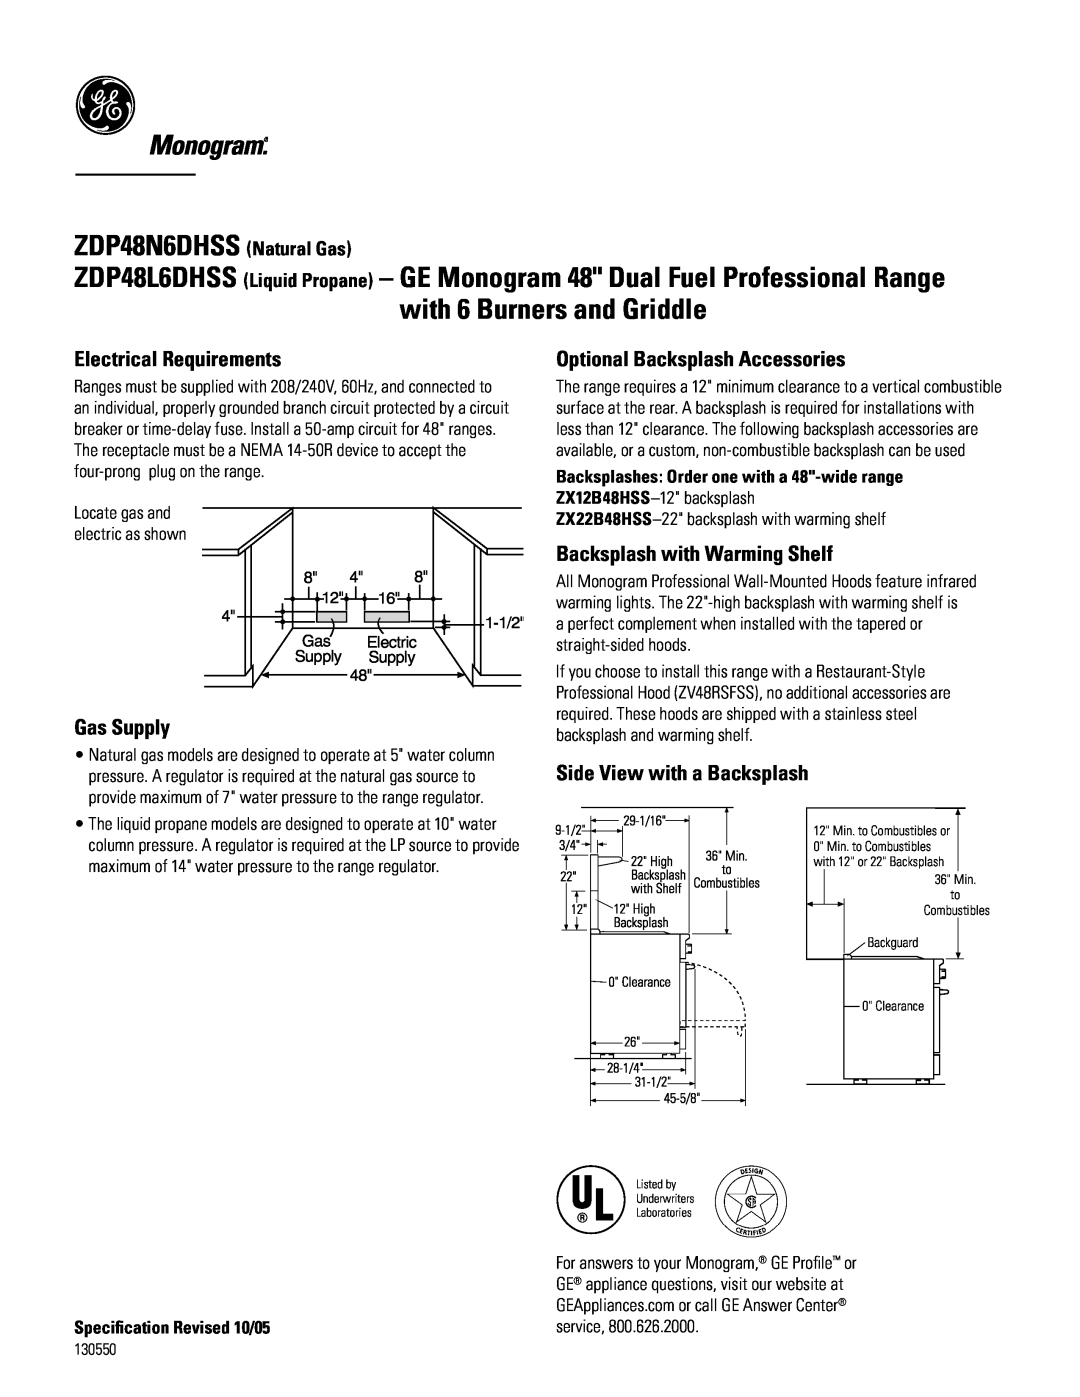 GE ZDP48L6DHSS6 Electrical Requirements, Gas Supply, Optional Backsplash Accessories, Backsplash with Warming Shelf, 1-1/2 